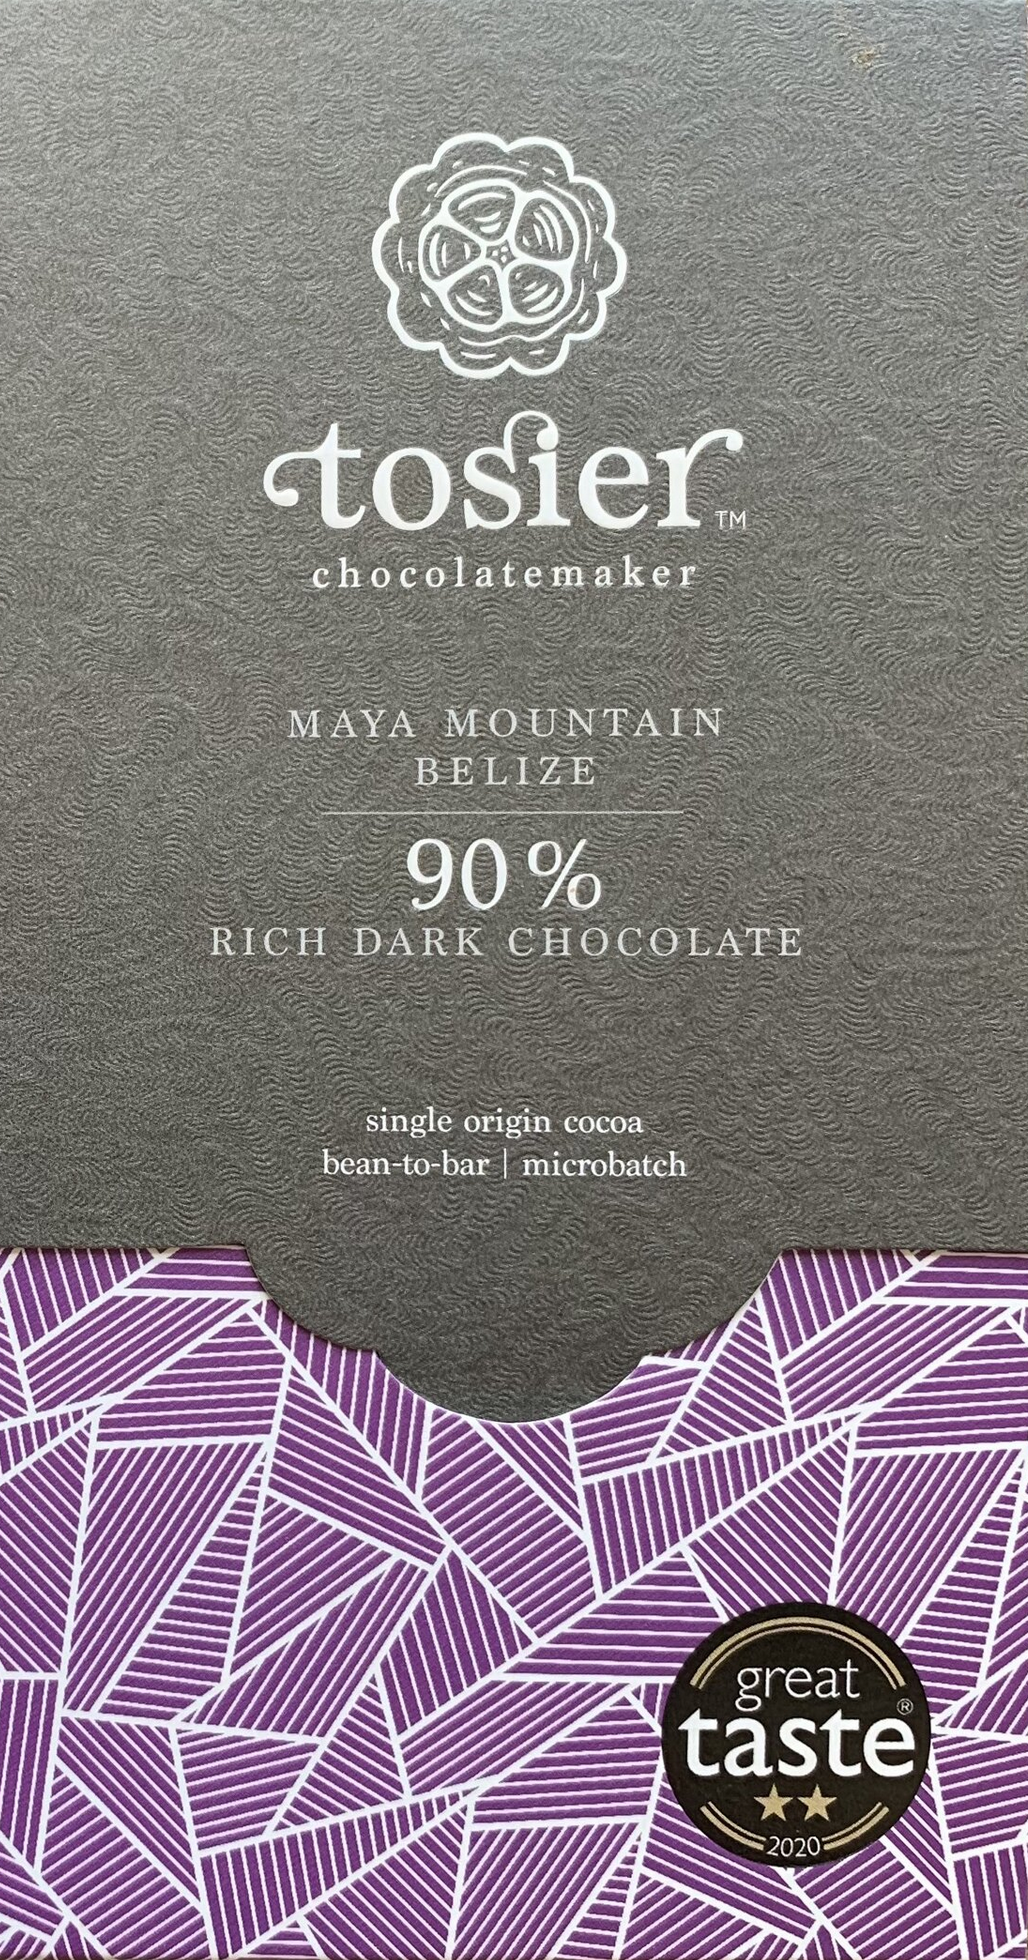 TOSIER | Dunkle Schokolade »Maya Mountain Belize« 90%